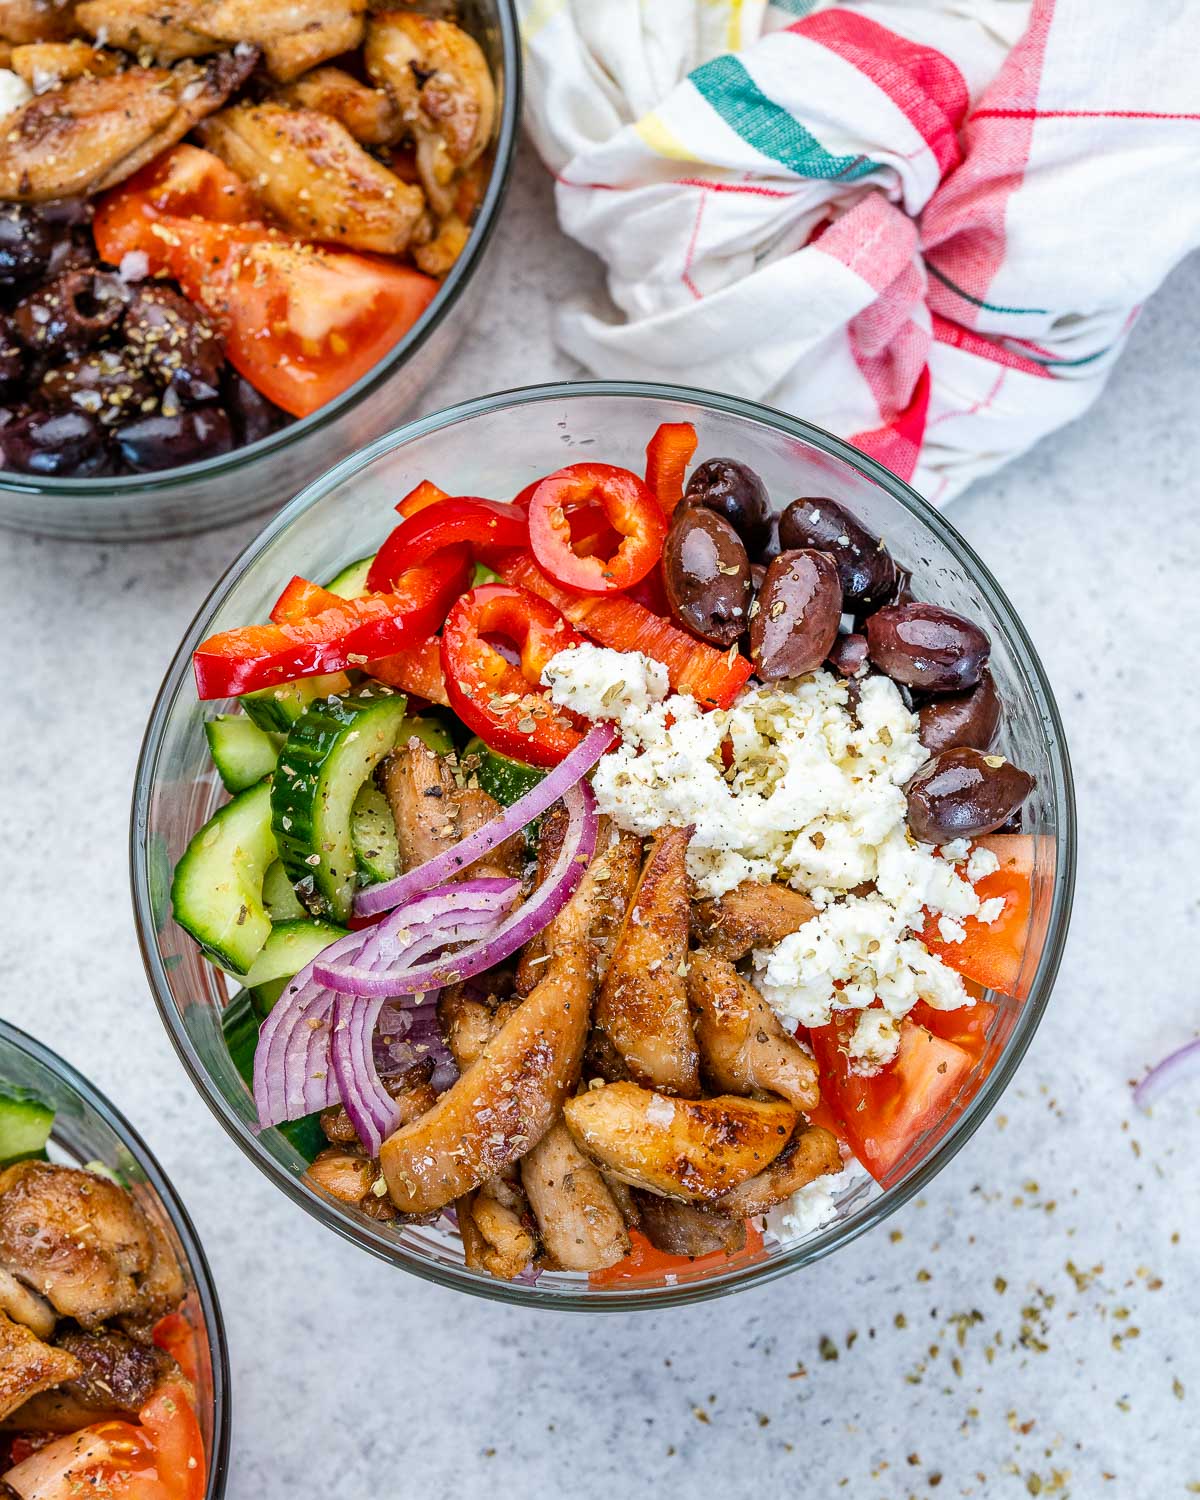 Lunch Meal Prep Greek Salad Bowl Recipe - Rainbow Delicious